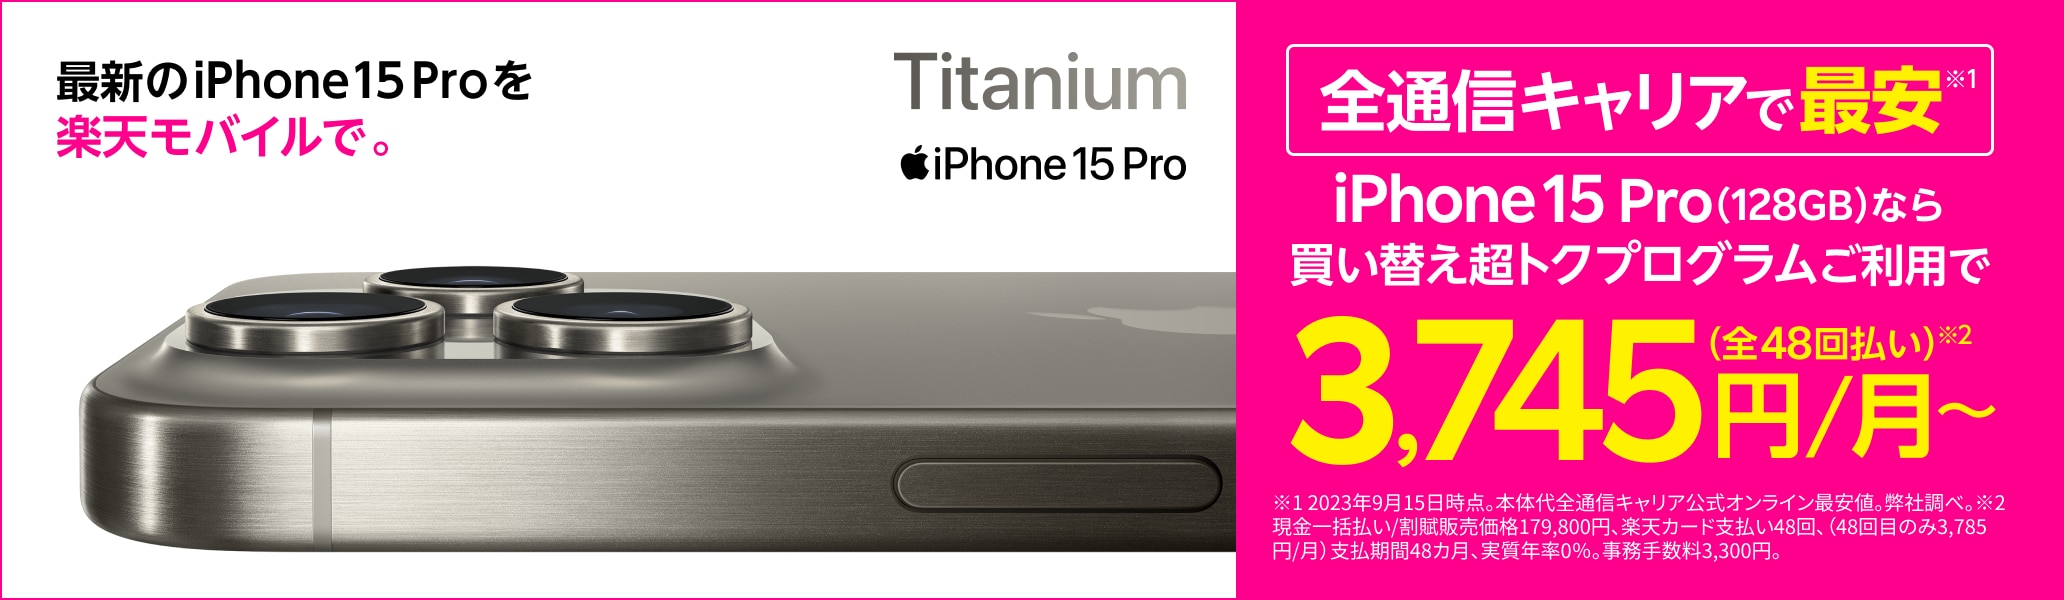 iPhone 15 Pro Titanium。全通信キャリアで最安※ ※2023年9月15日時点。弊社調べ